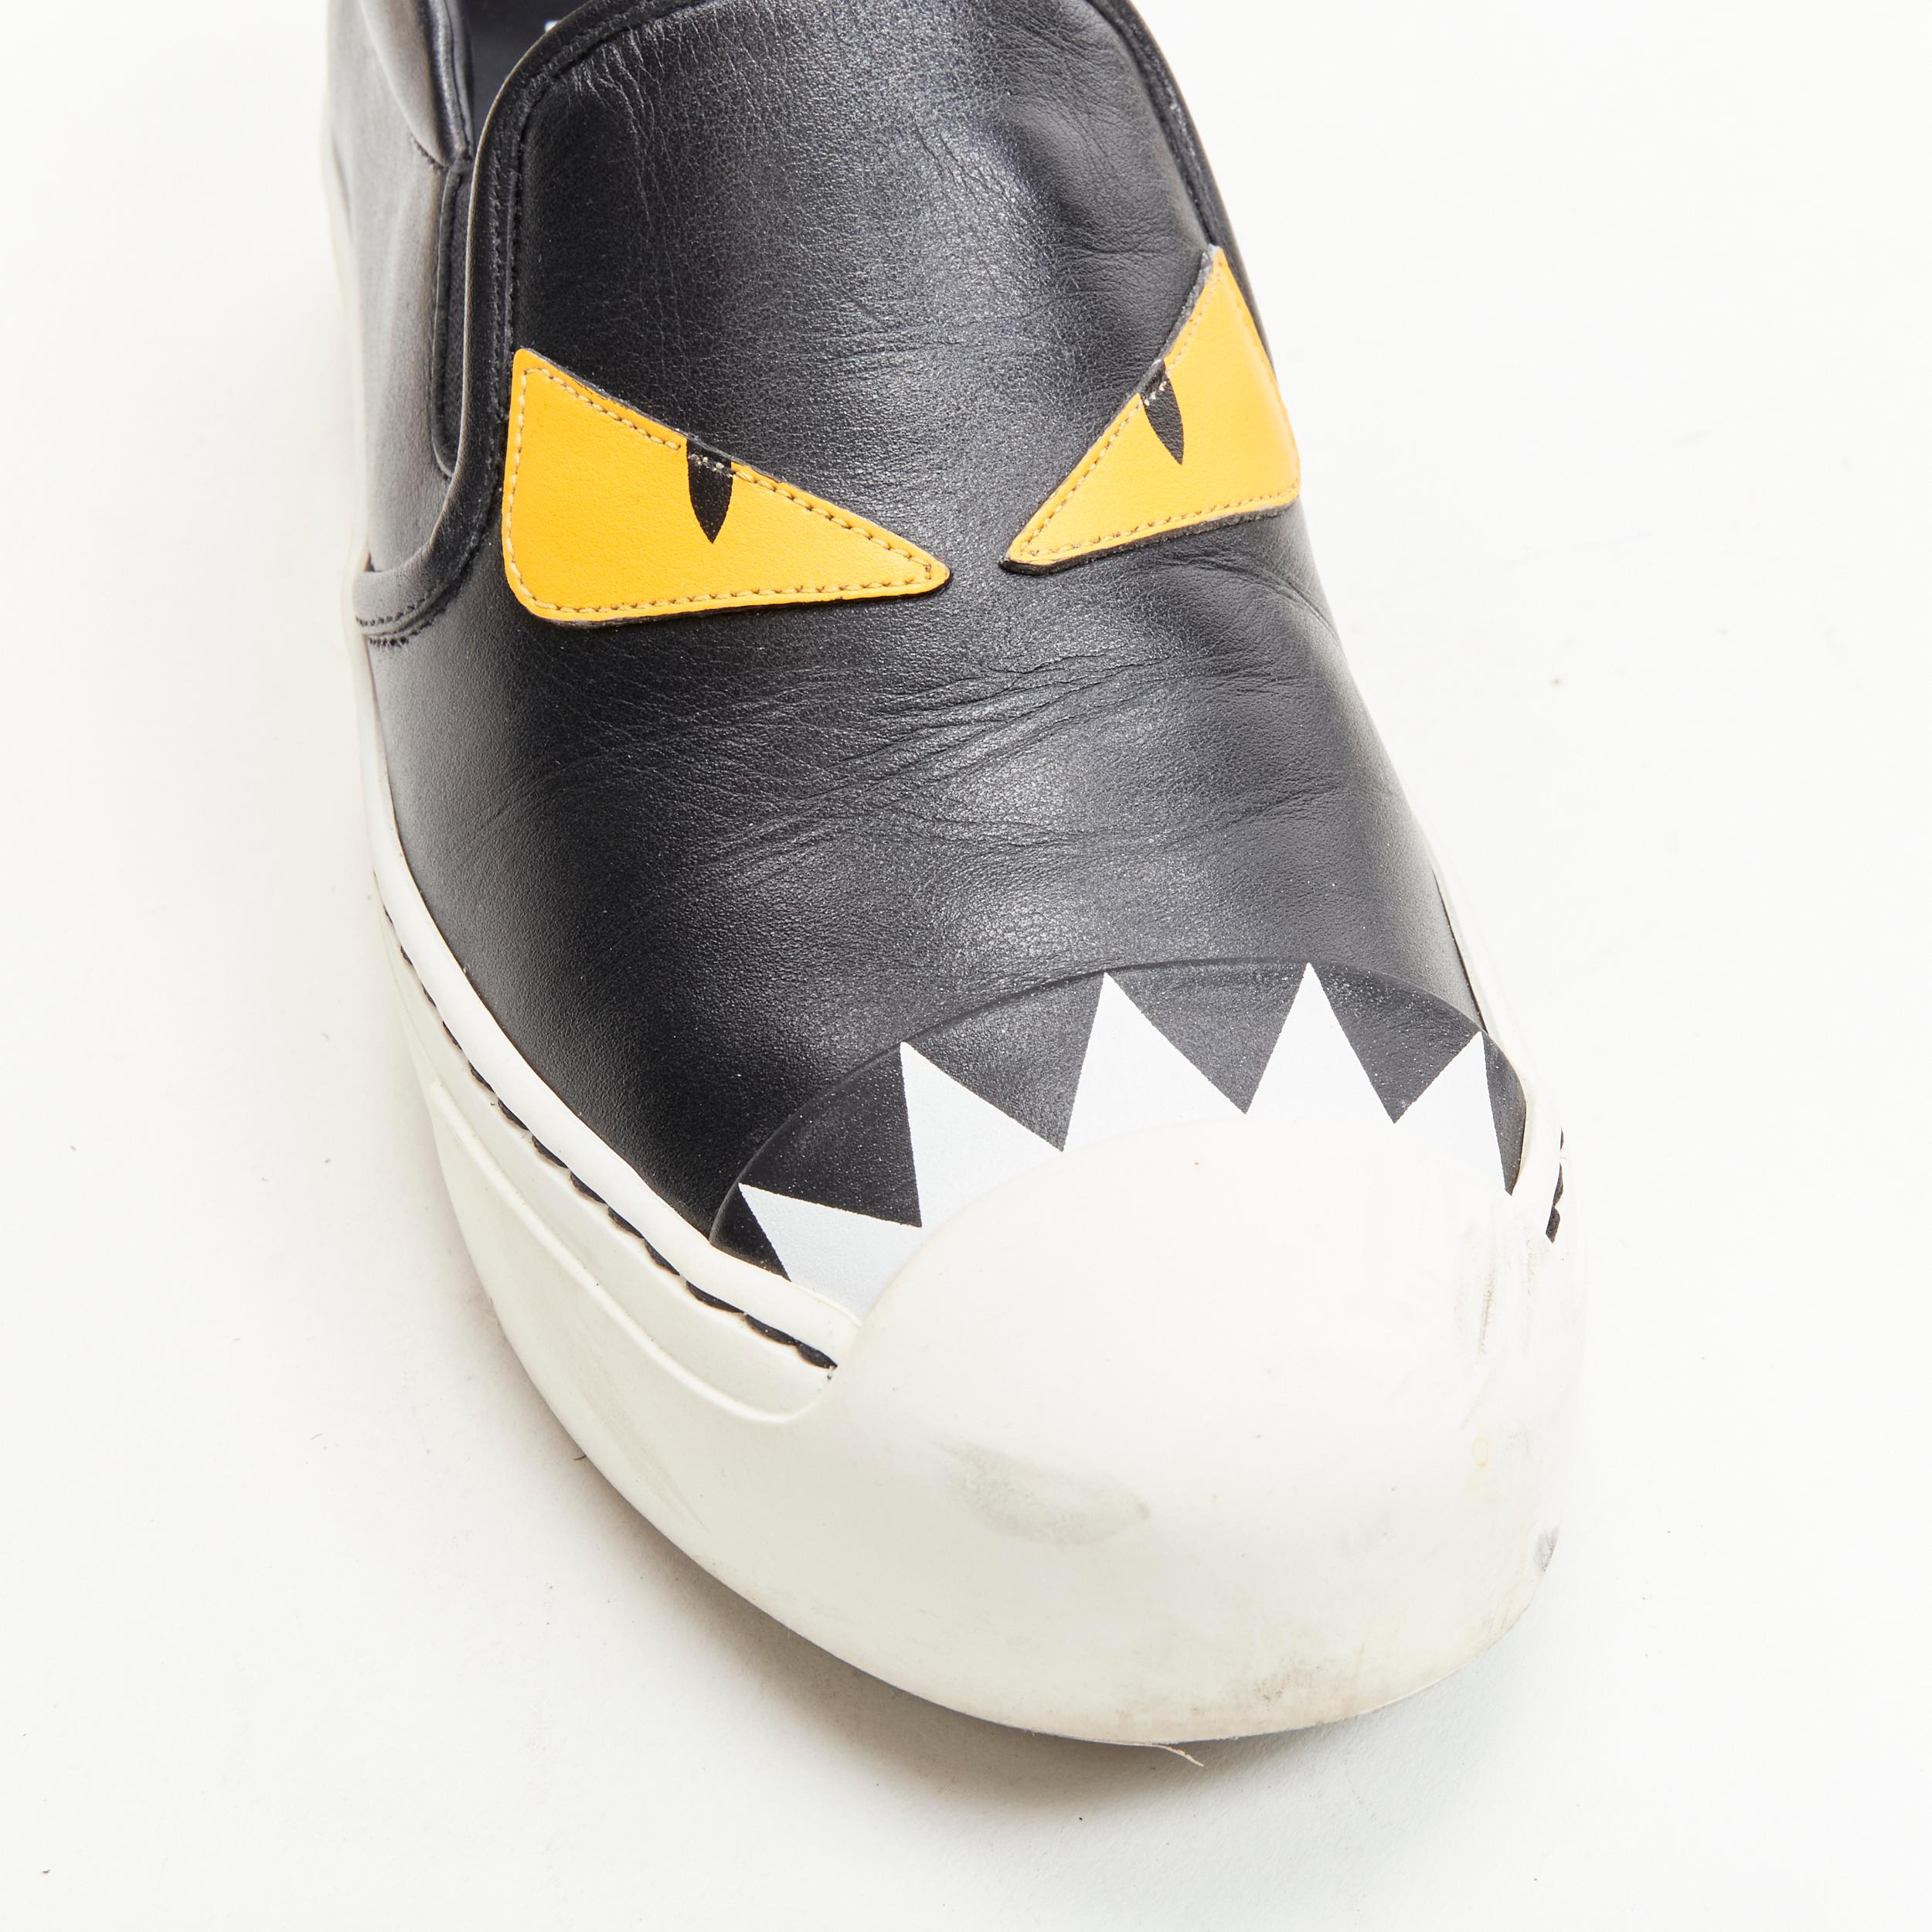 FENDI Monster Bug Eye black yellow leather slip on skate sneakers shoes EU36.5 For Sale 1